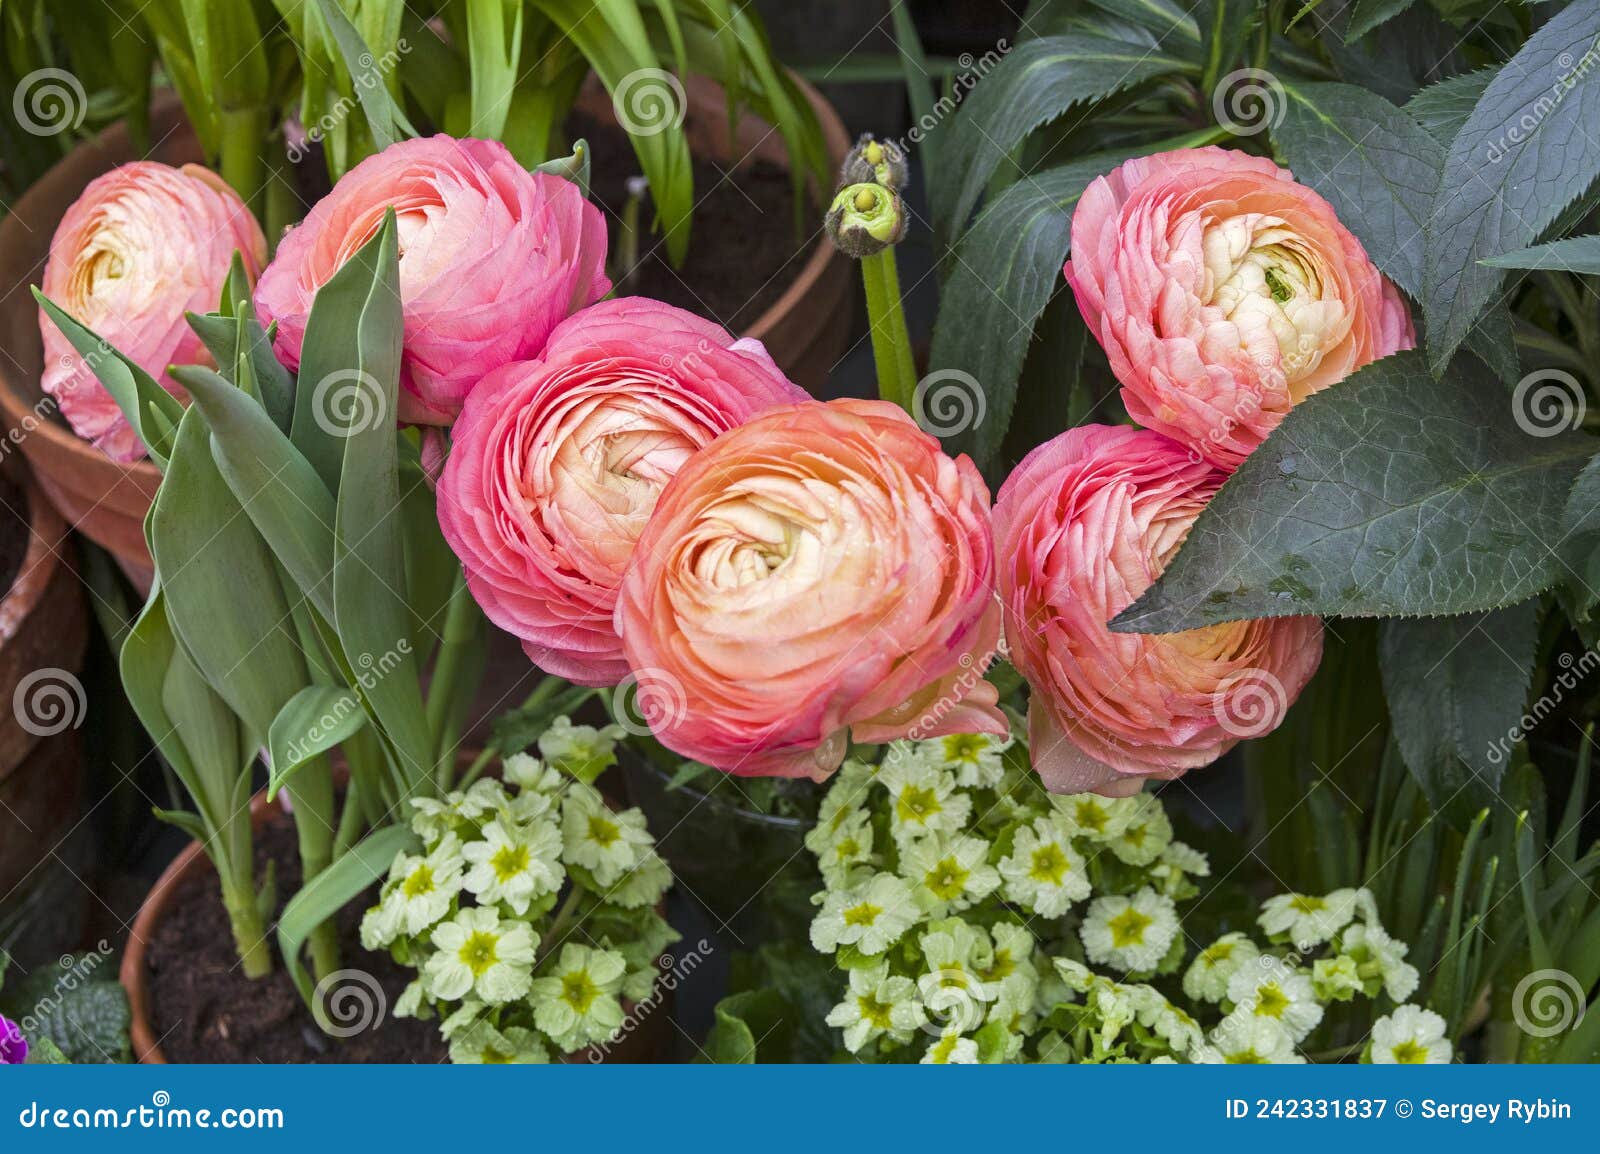 pink ranuncouleus garden buttercup of clooney rosado  variety